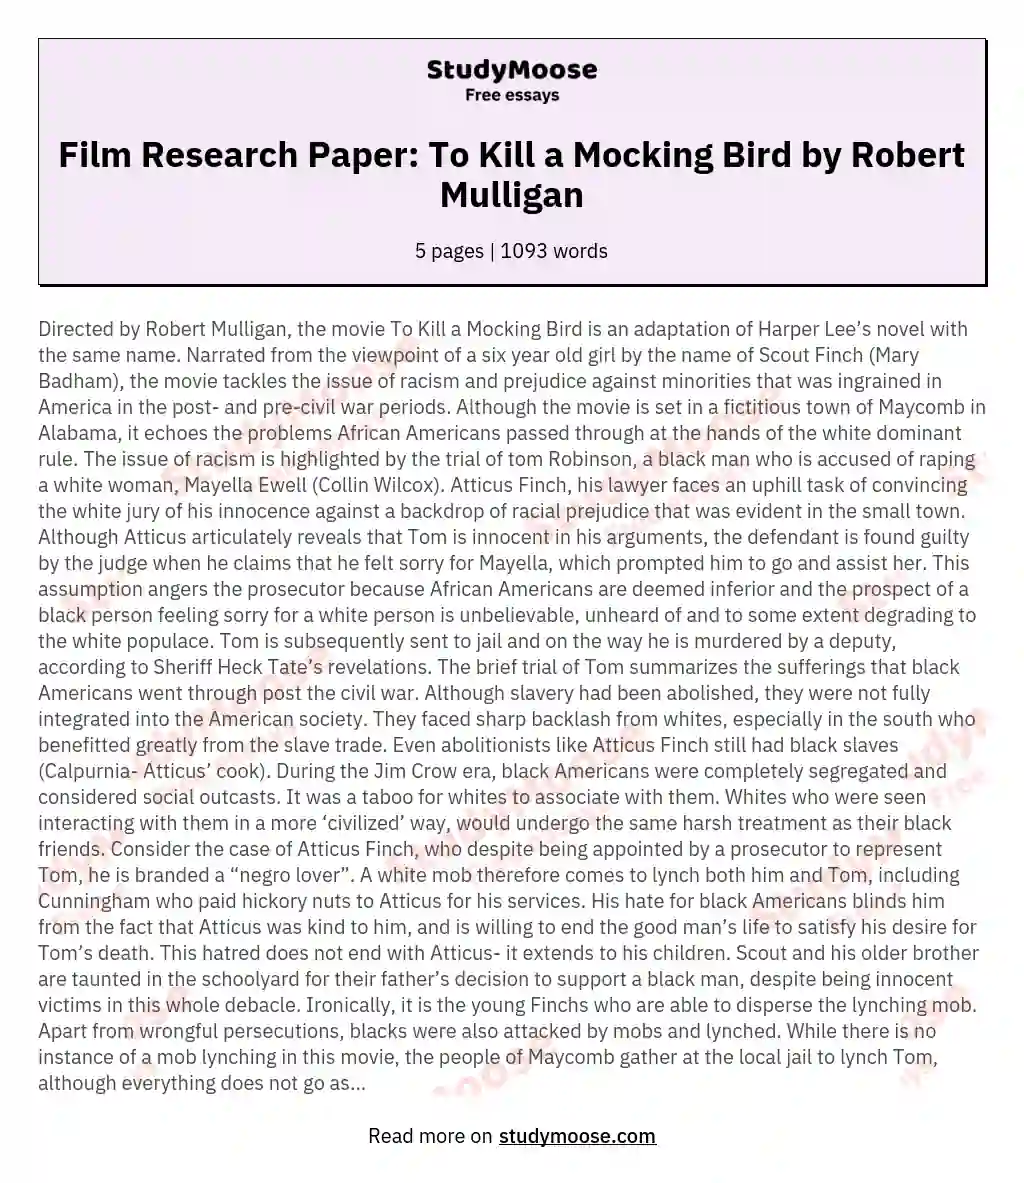 Film Research Paper: To Kill a Mocking Bird by Robert Mulligan